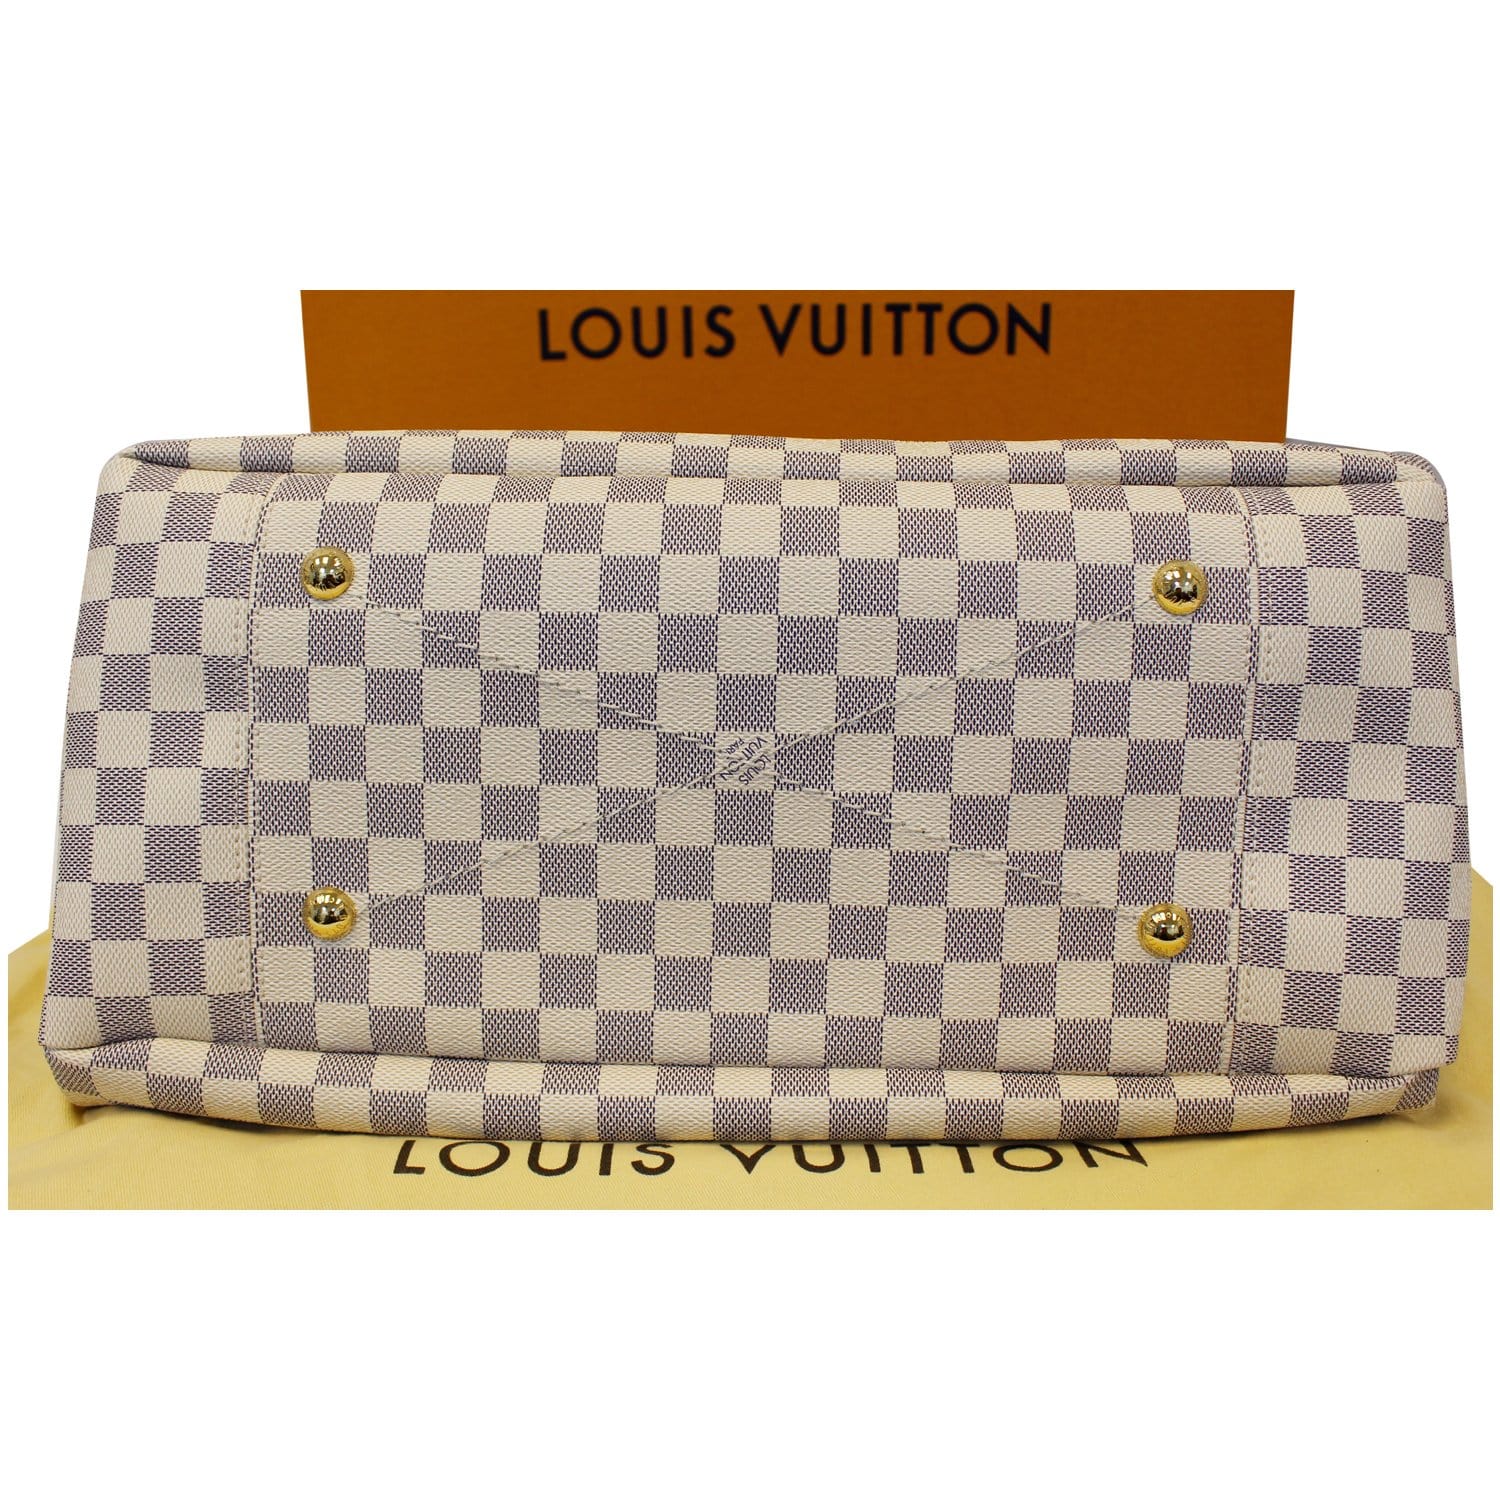 Louis Vuitton cursor – Custom Cursor